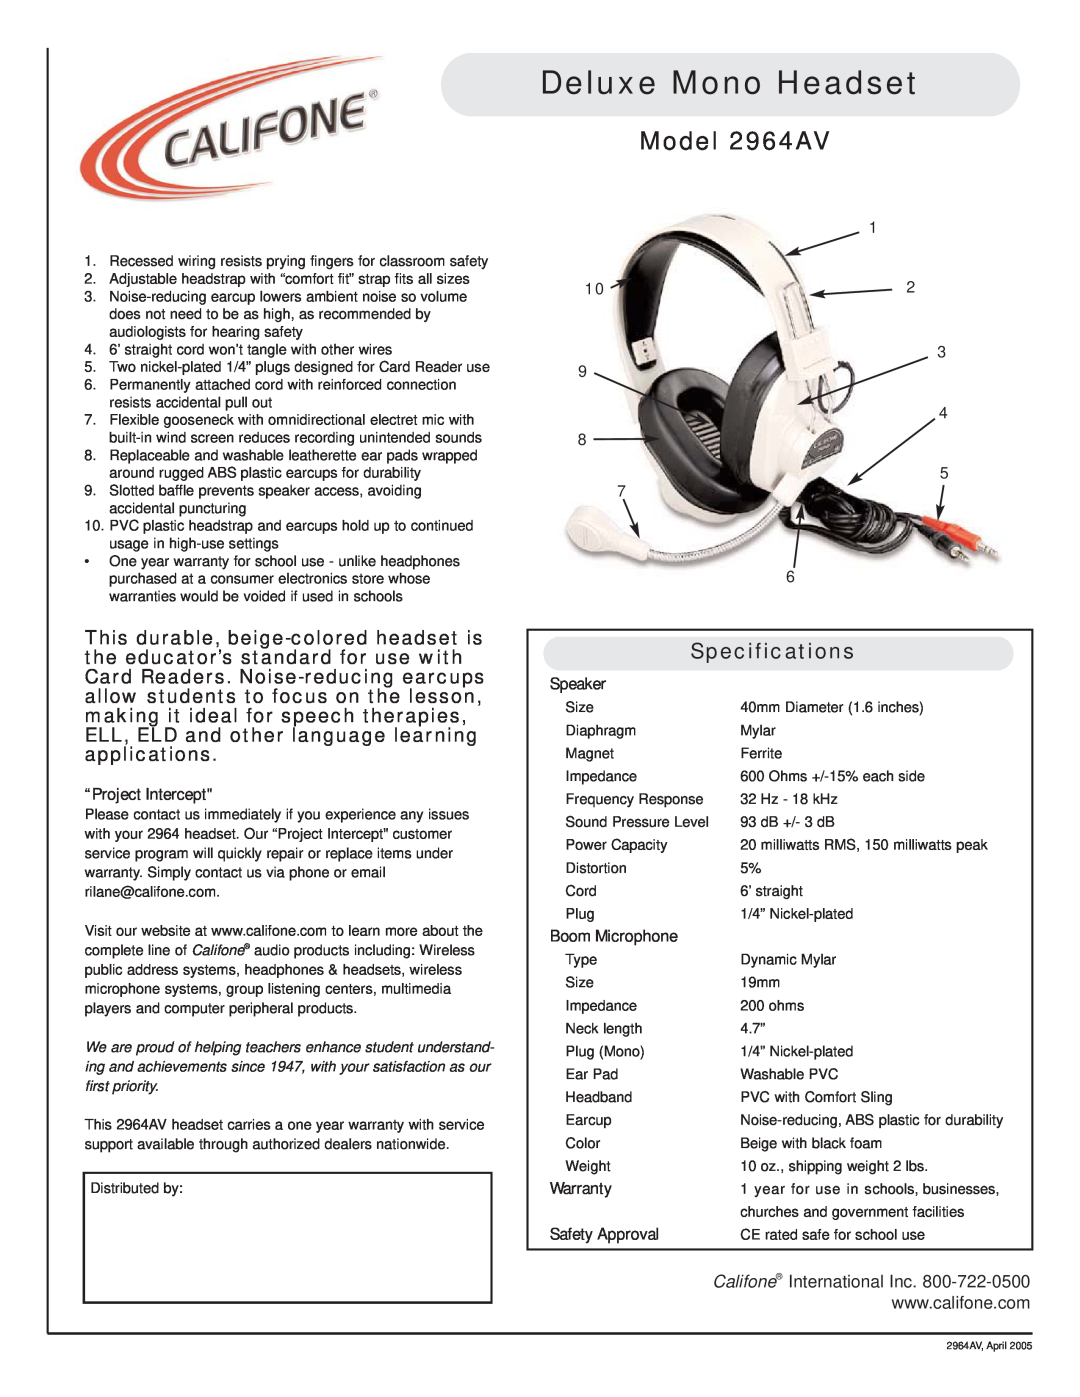 Califone specifications Deluxe Mono Headset, Model 2964AV, Specifications, “Project Intercept, Speaker, Boom Microphone 